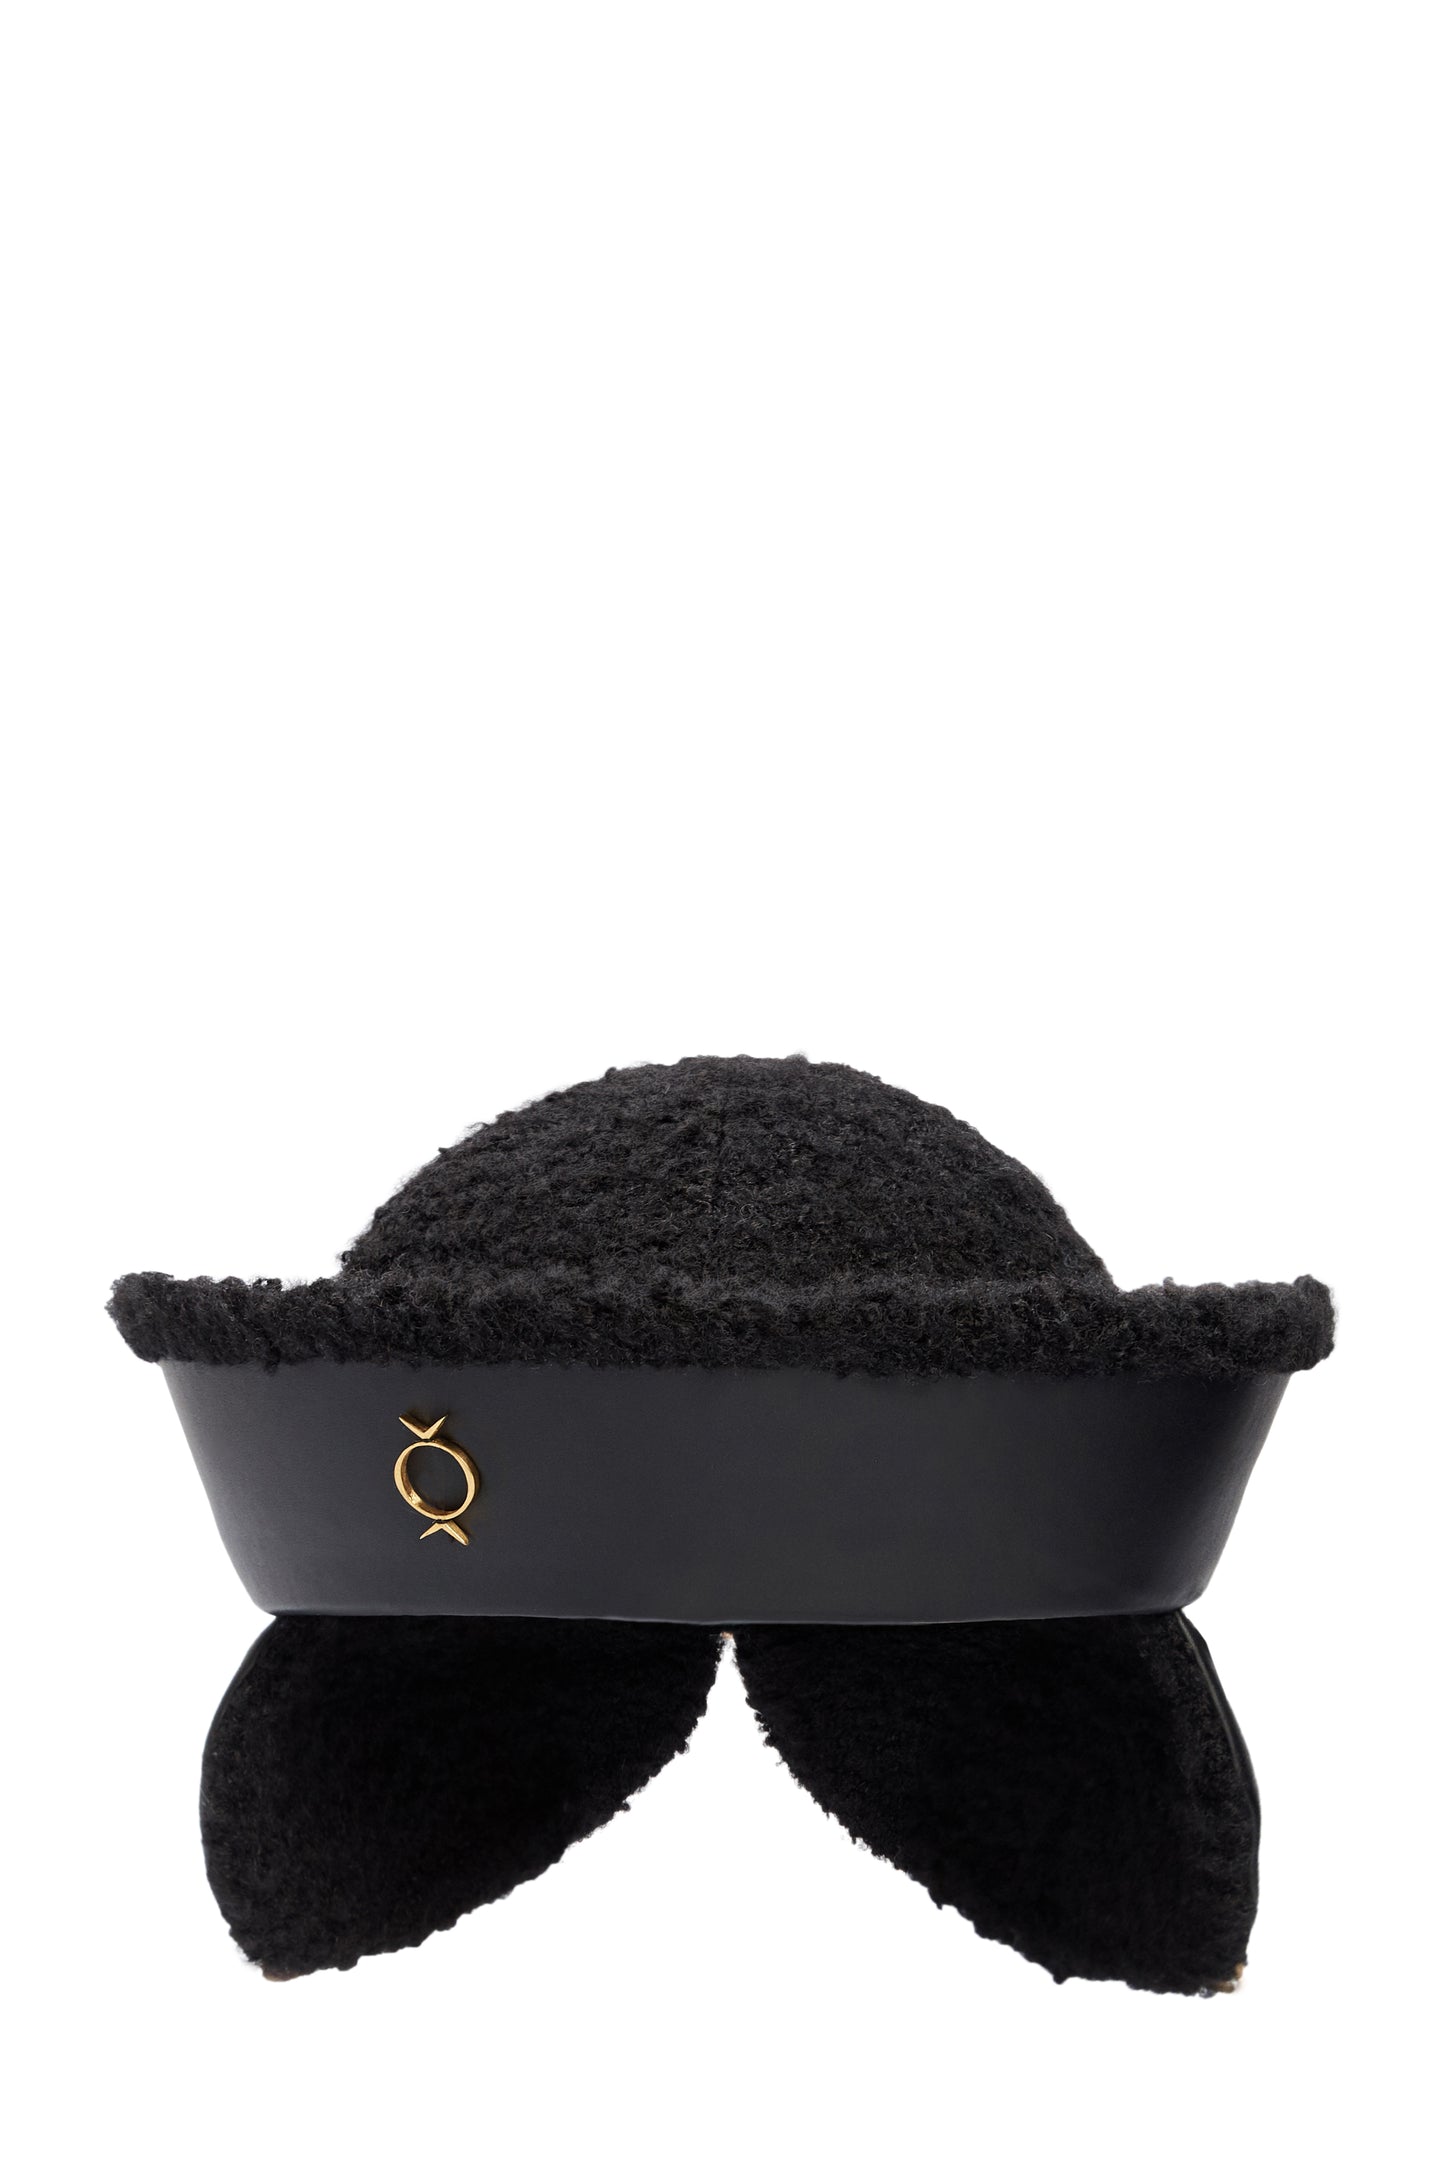 Black Winter with Earmuffs Sea Hat